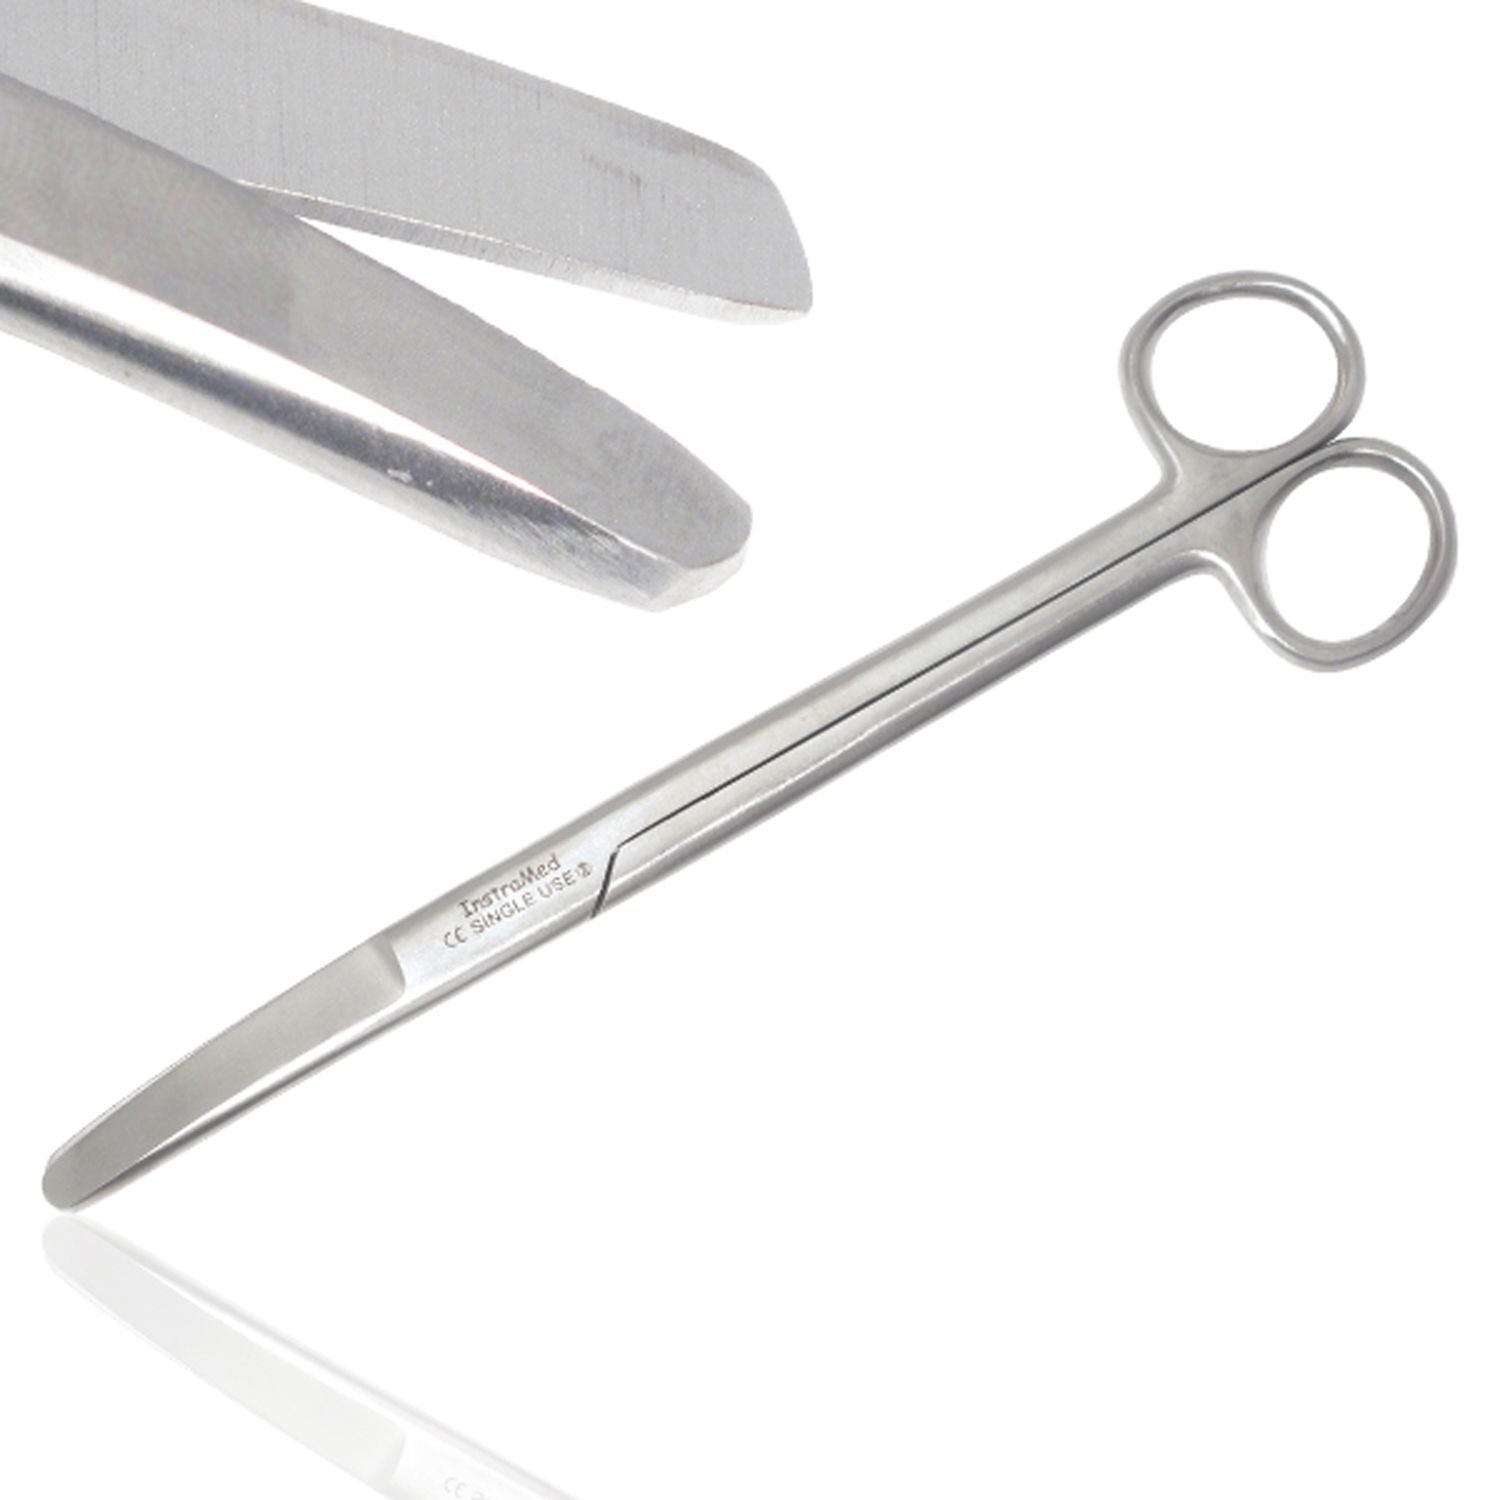 Instramed Curved Uterine Sims Scissors | 20cm | Single